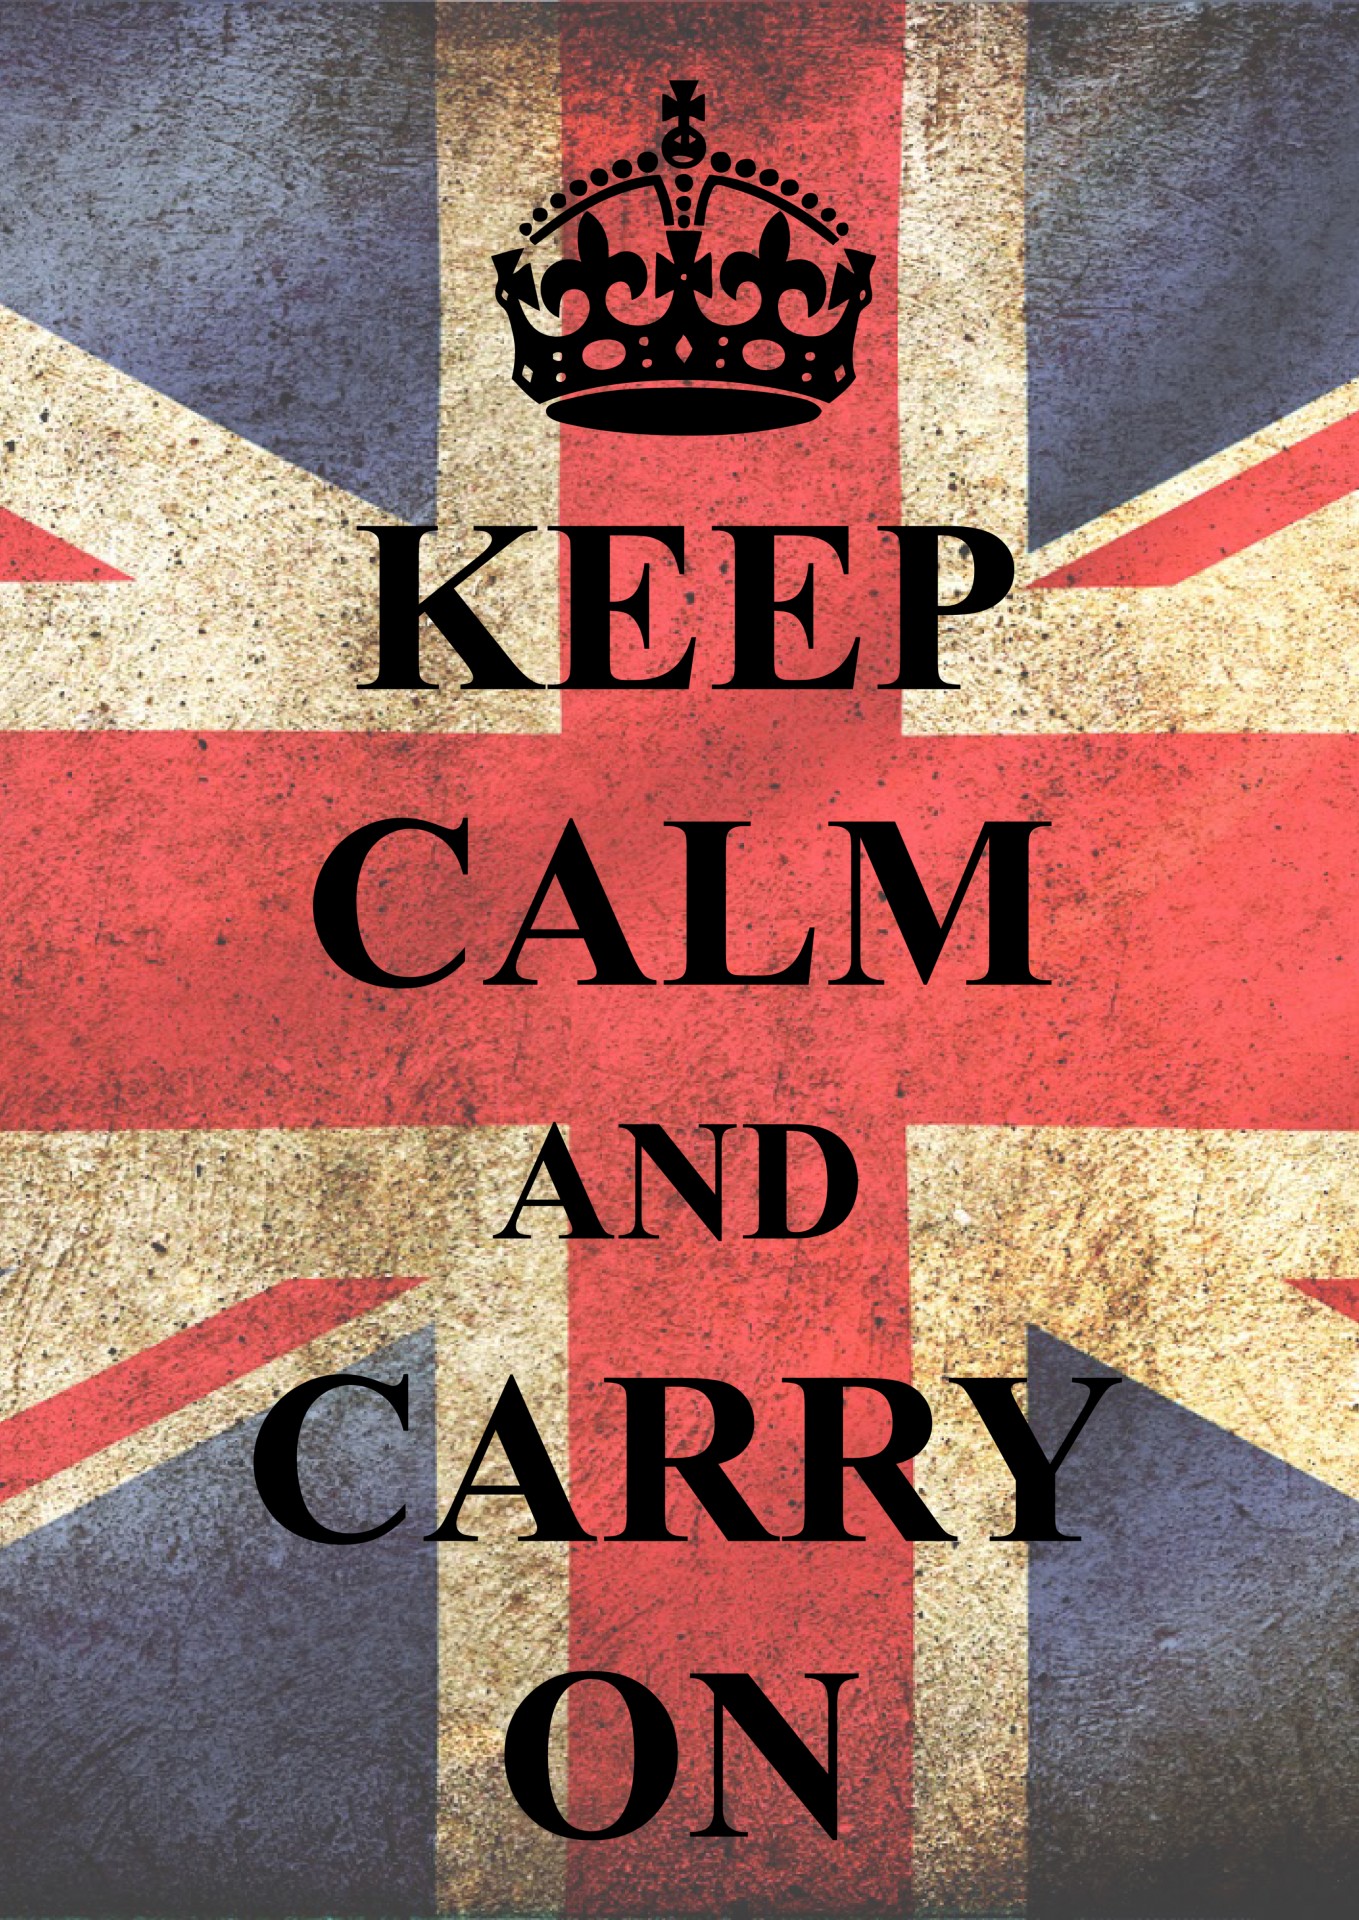 keep calm and carry on make